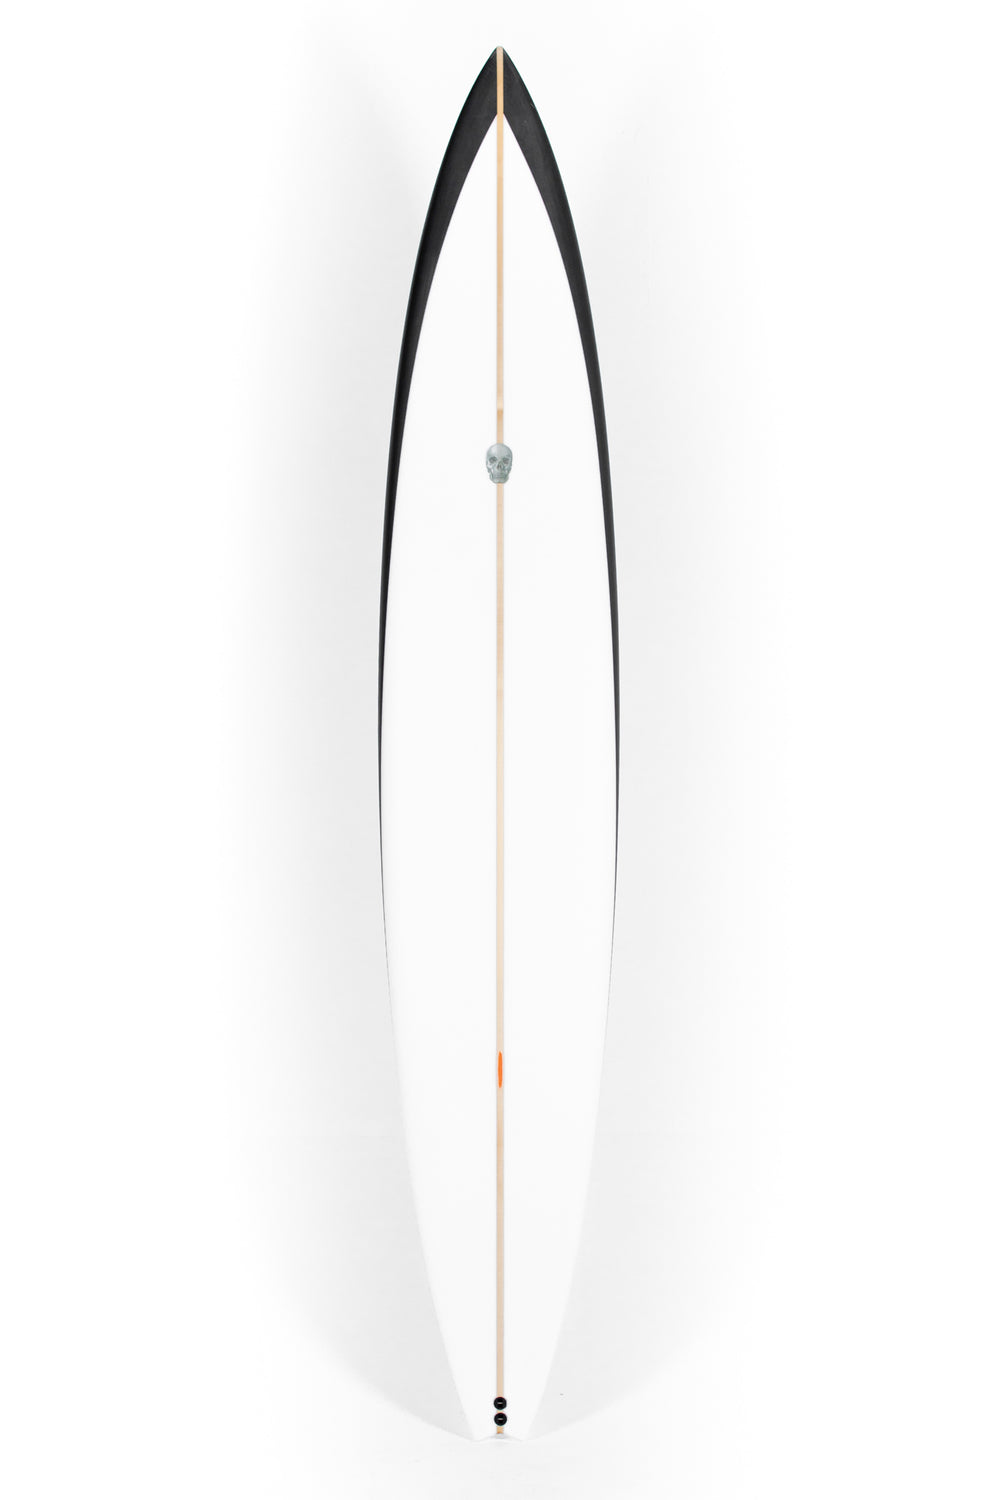 Christenson Surfboards - SICARIO - 9'6